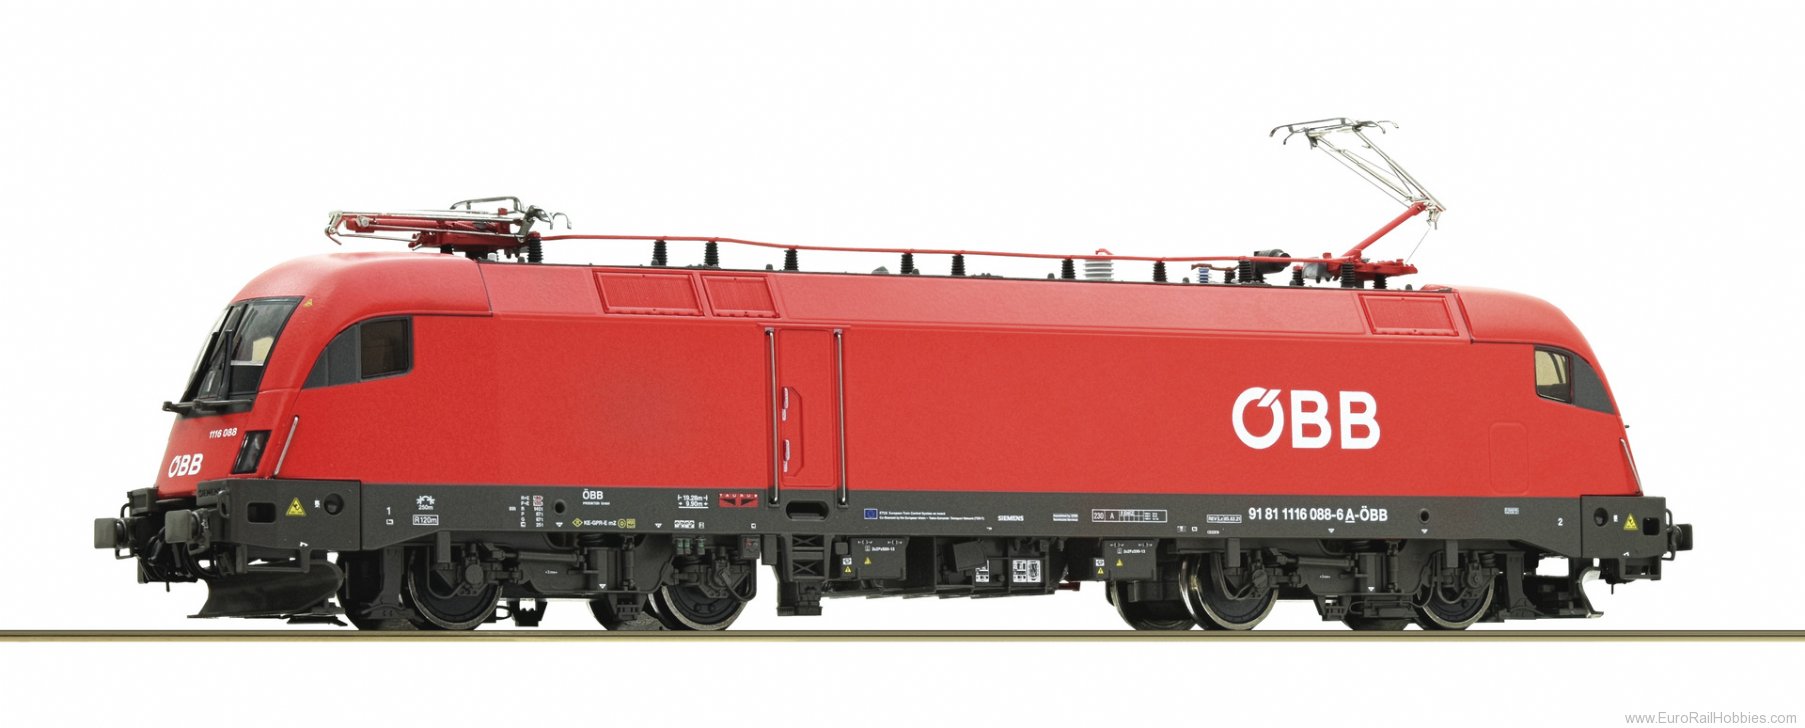 Roco 78527 Electric locomotive 1116 088-6 ÃBB (AC Dig